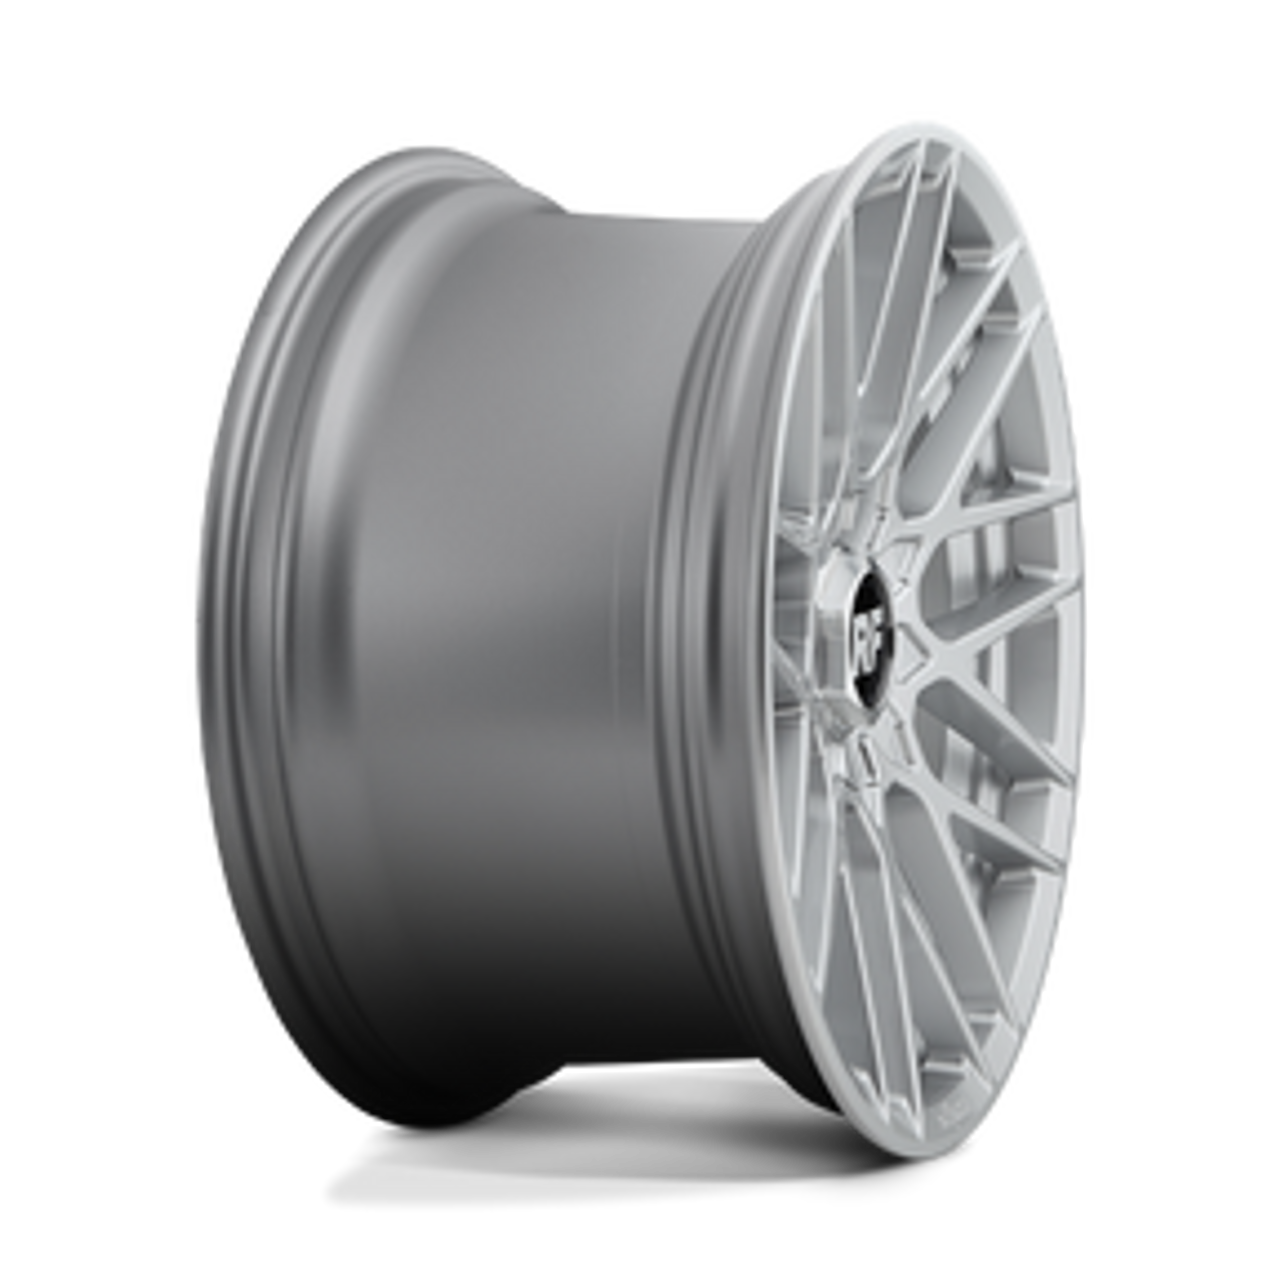 Rotiform R140 RSE Wheel 17x8 4x100/4x114.3 40 Offset - Gloss Silver